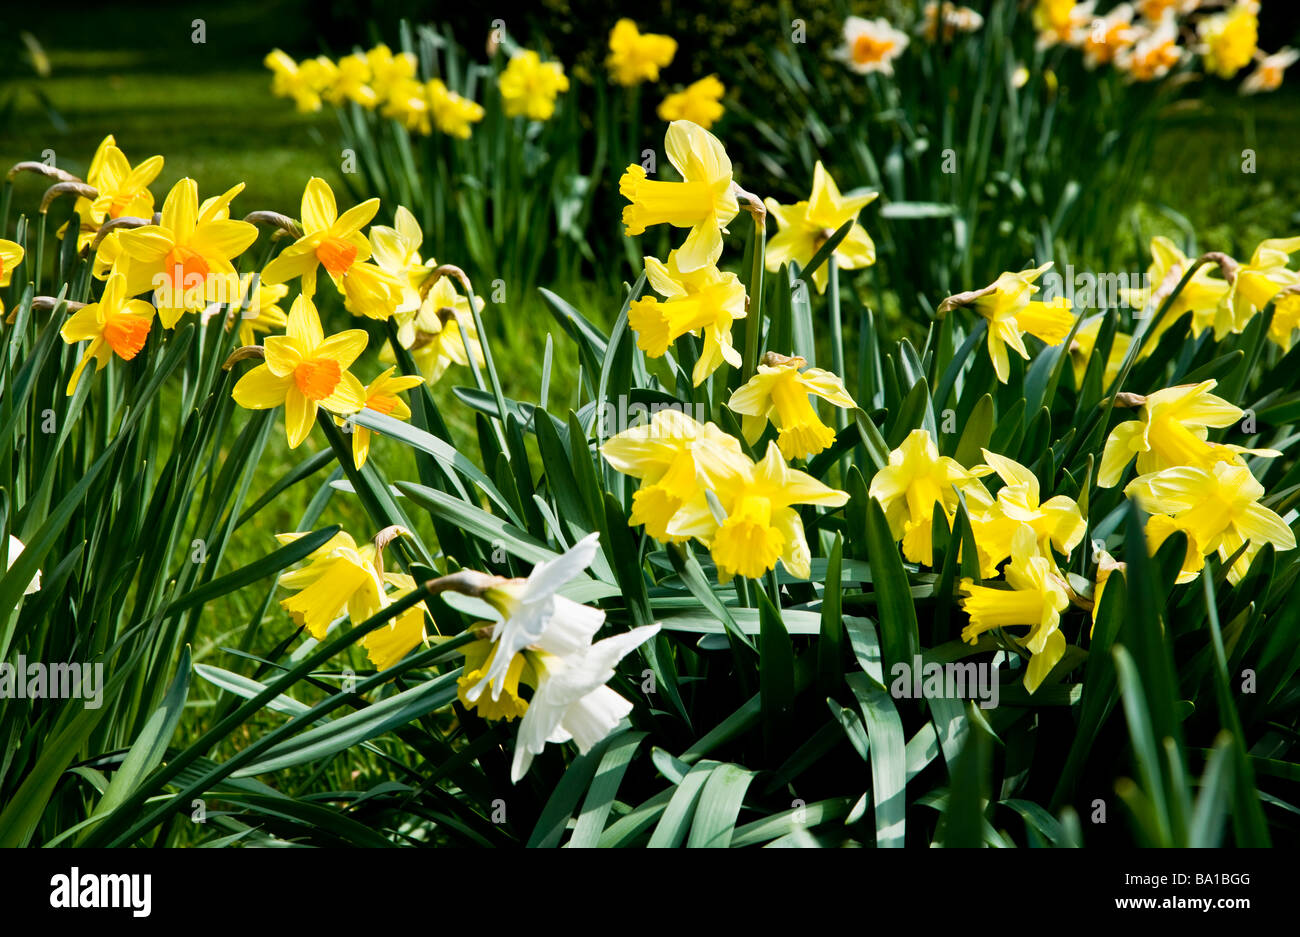 Variedades diferentes especies o cultivares de Narciso o Narciso Foto de stock